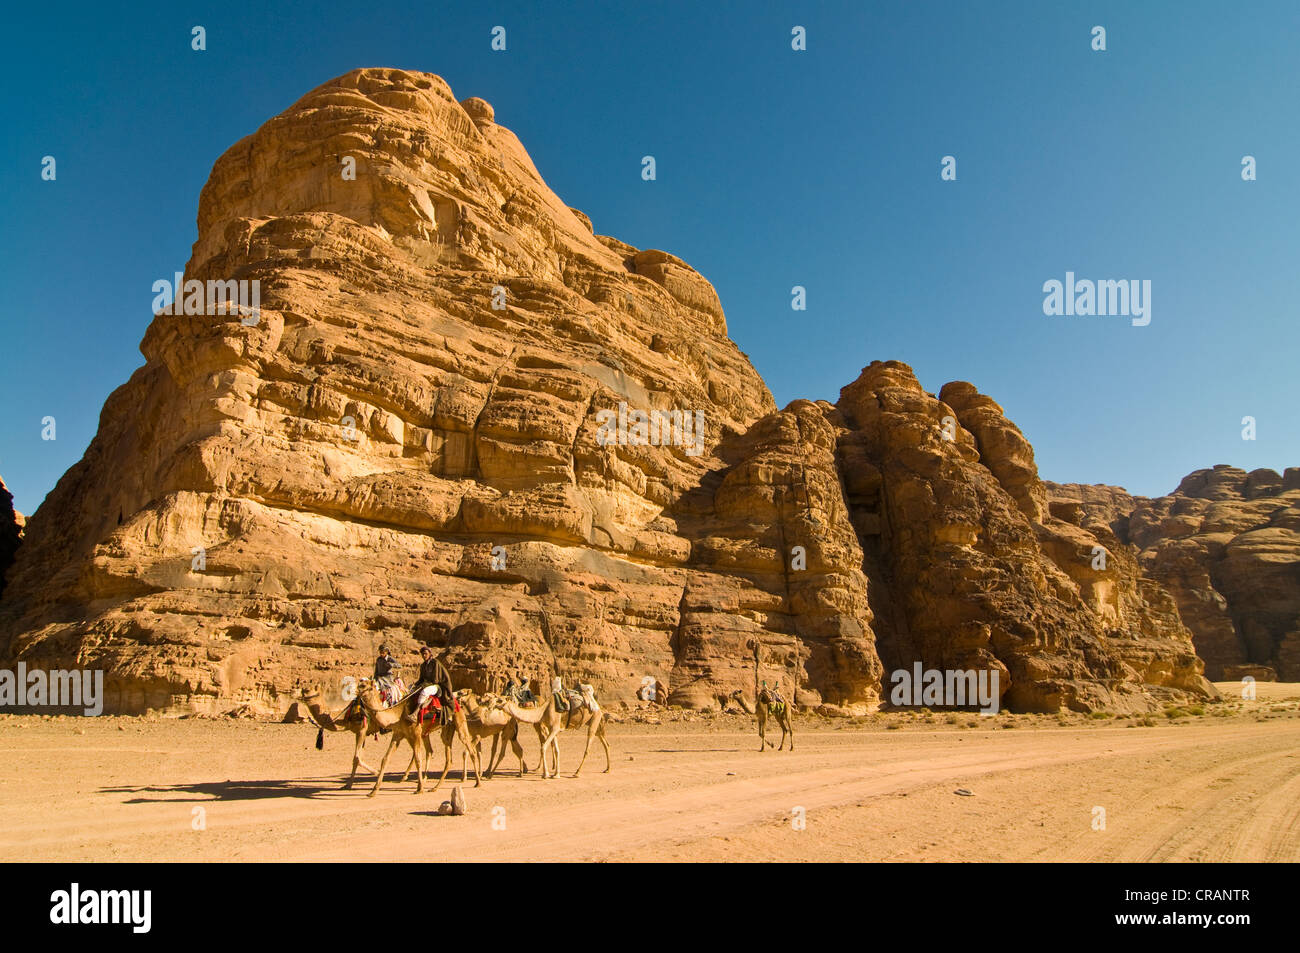 Rocks, Bedouins with camels in front, desert, Wadi Rum, Jordan, Middle East Stock Photo